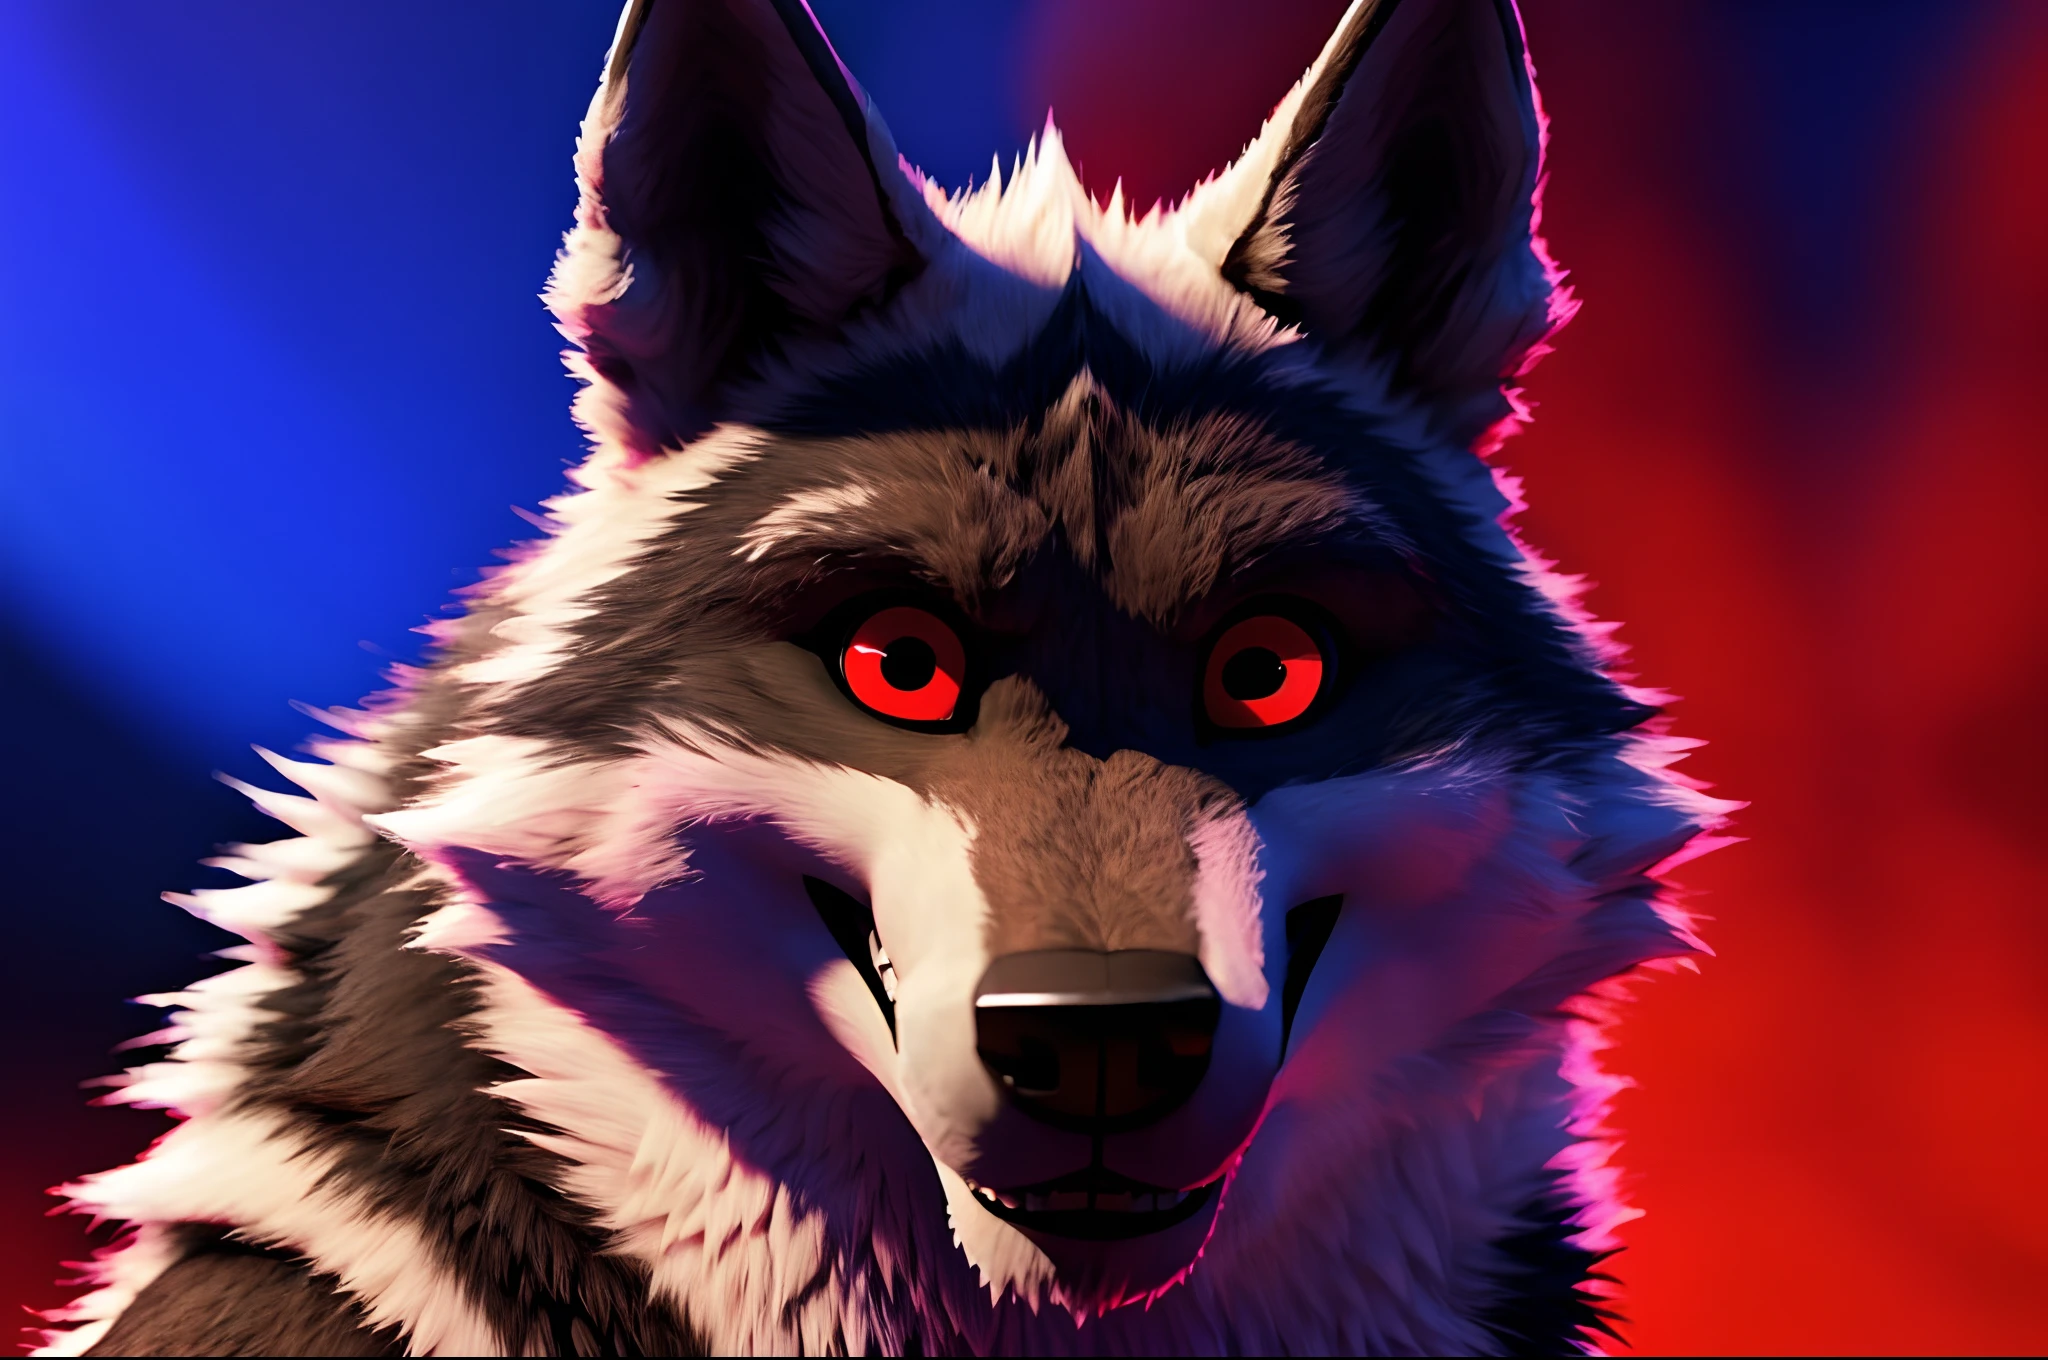 "Facebook 上的封面照片: 死亡之狼有著迷人的紅眼睛. 3D超高清8K."